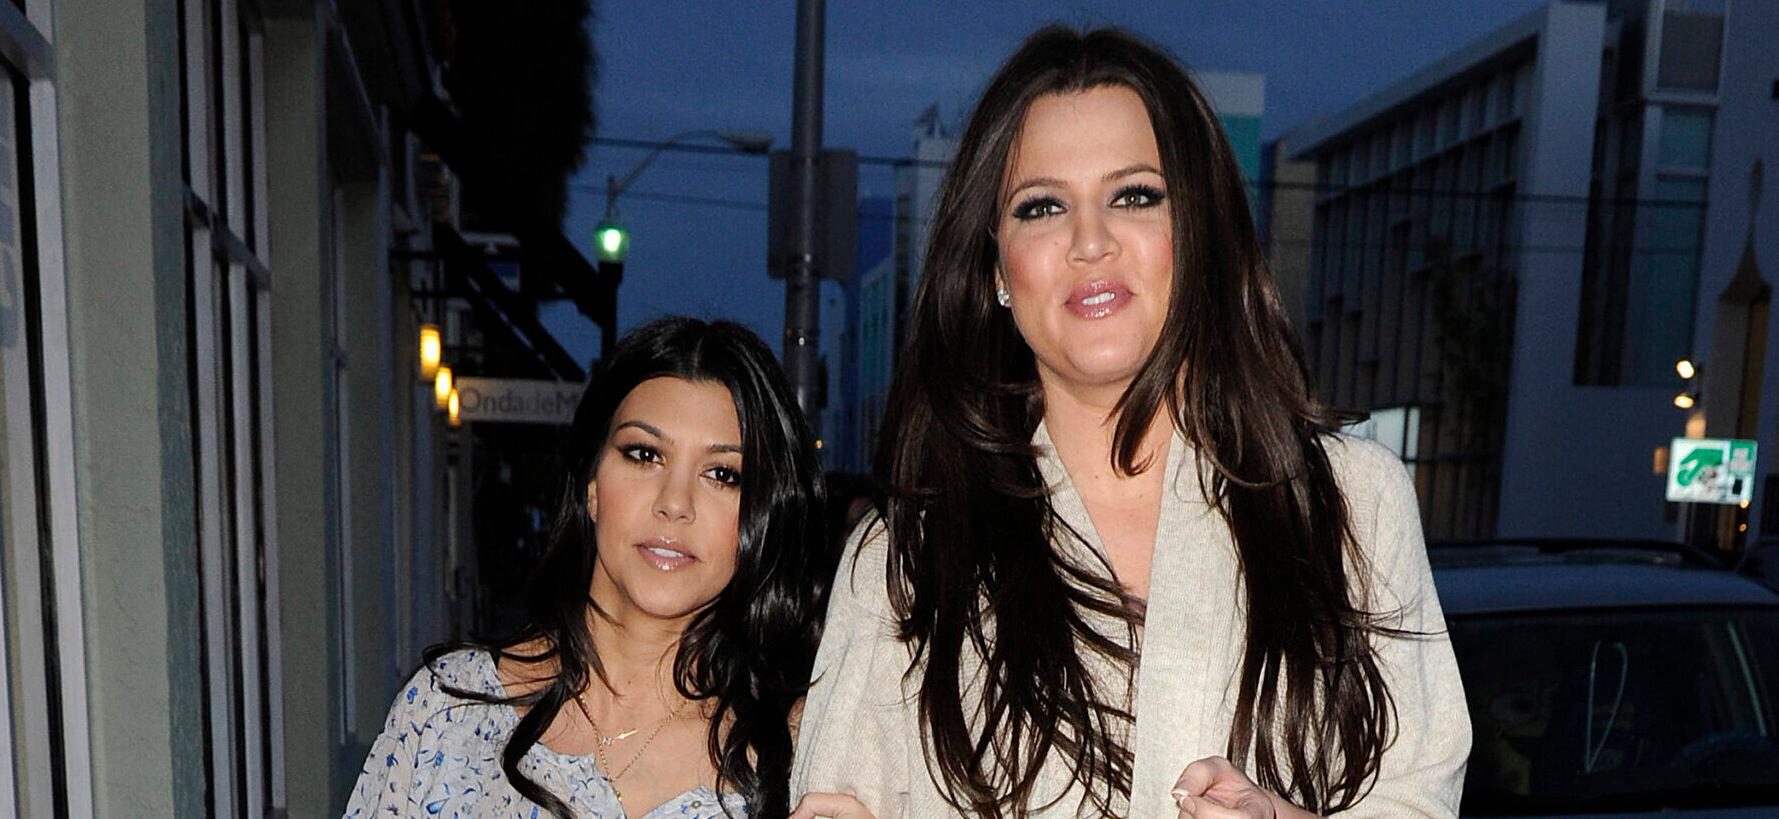 Reality TV stars Kourtney Kardashian and sister Khloe Kardashian are seen shopping on Lincoln Road Mall in South Beach